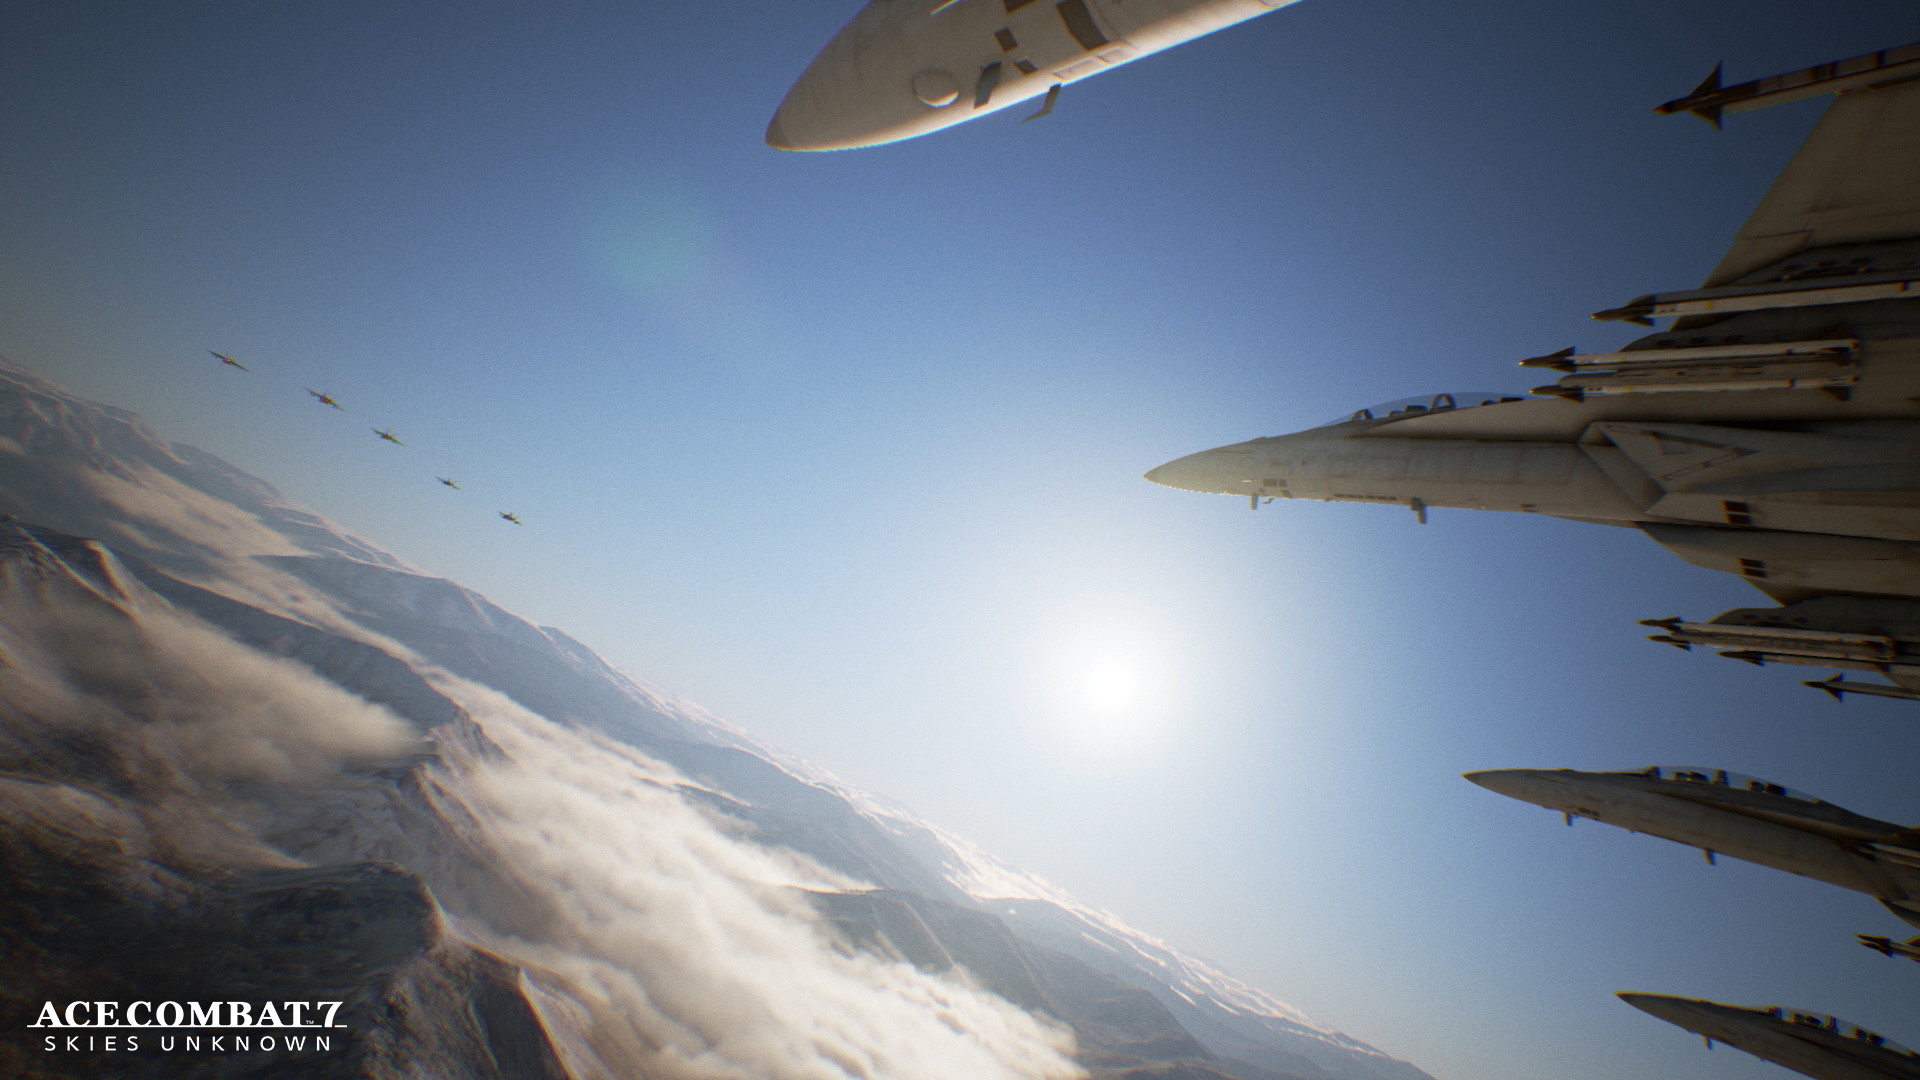 Ace Combat 7: Skies Unknown - screenshot 10